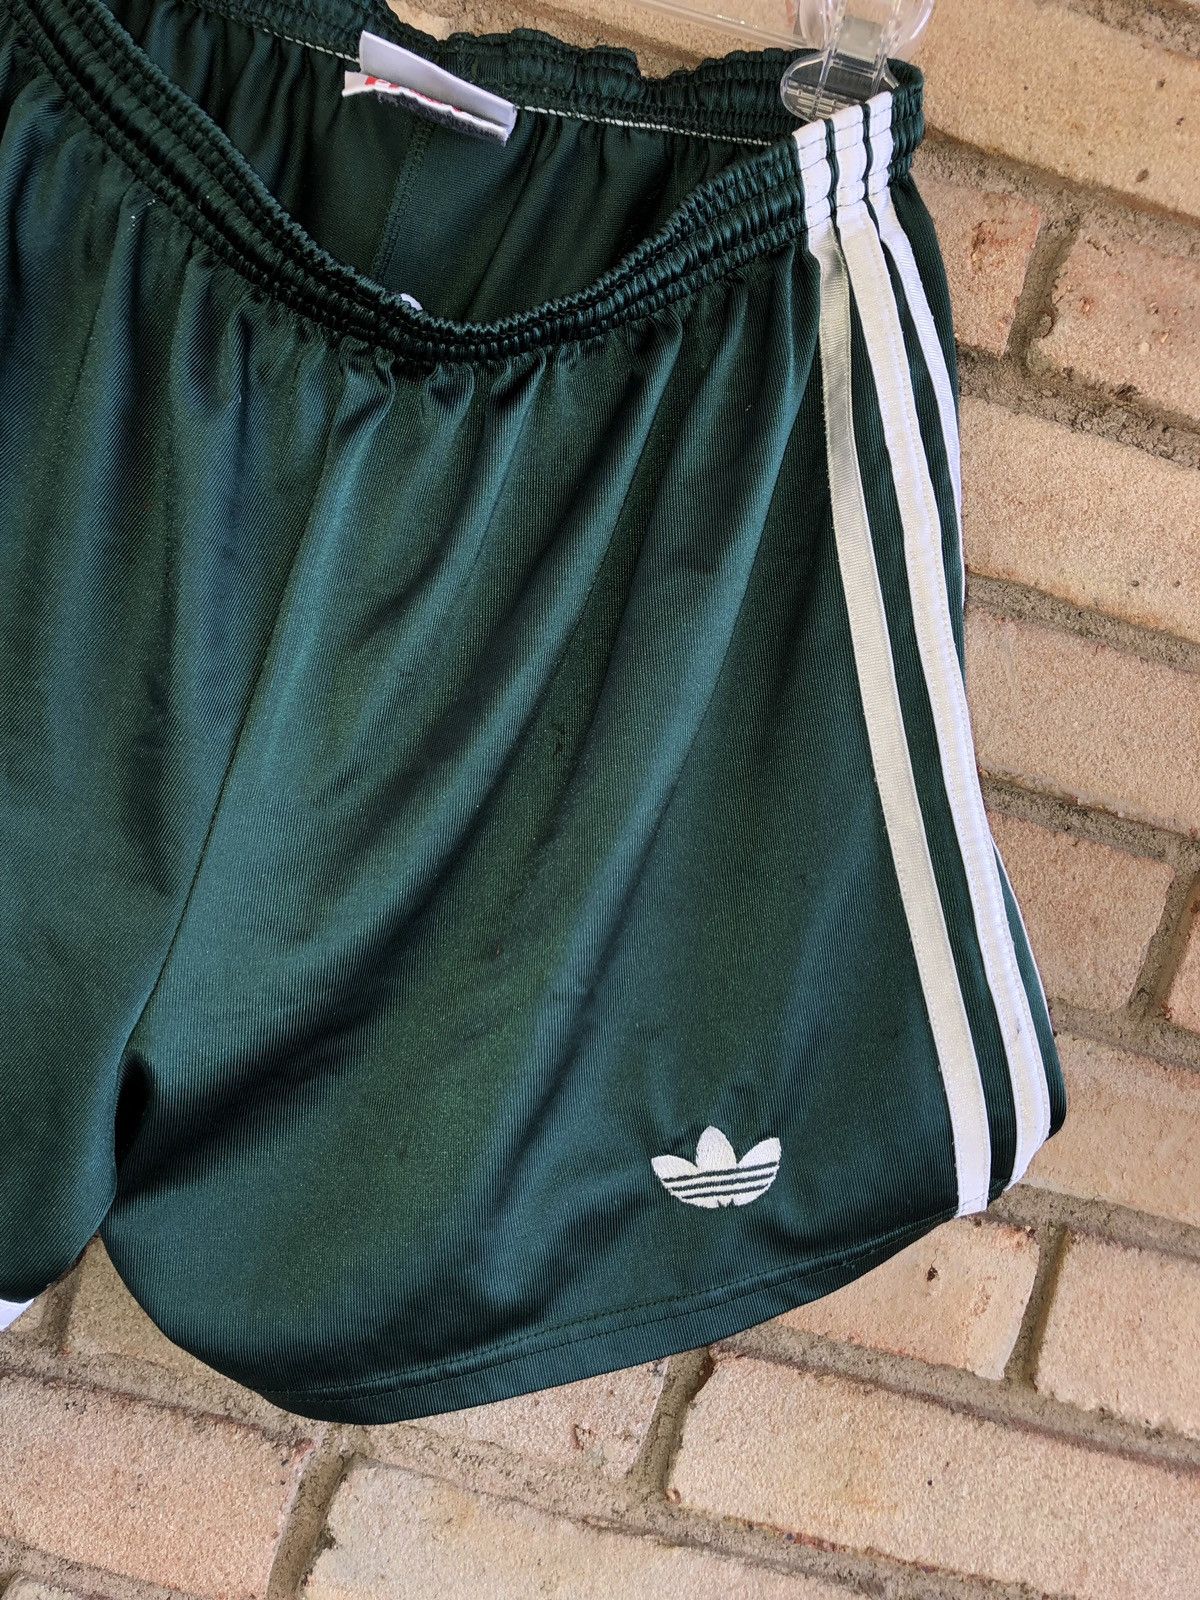 Adidas Vintage Adidas Originals Silk Shorts Size US 29 - 4 Preview